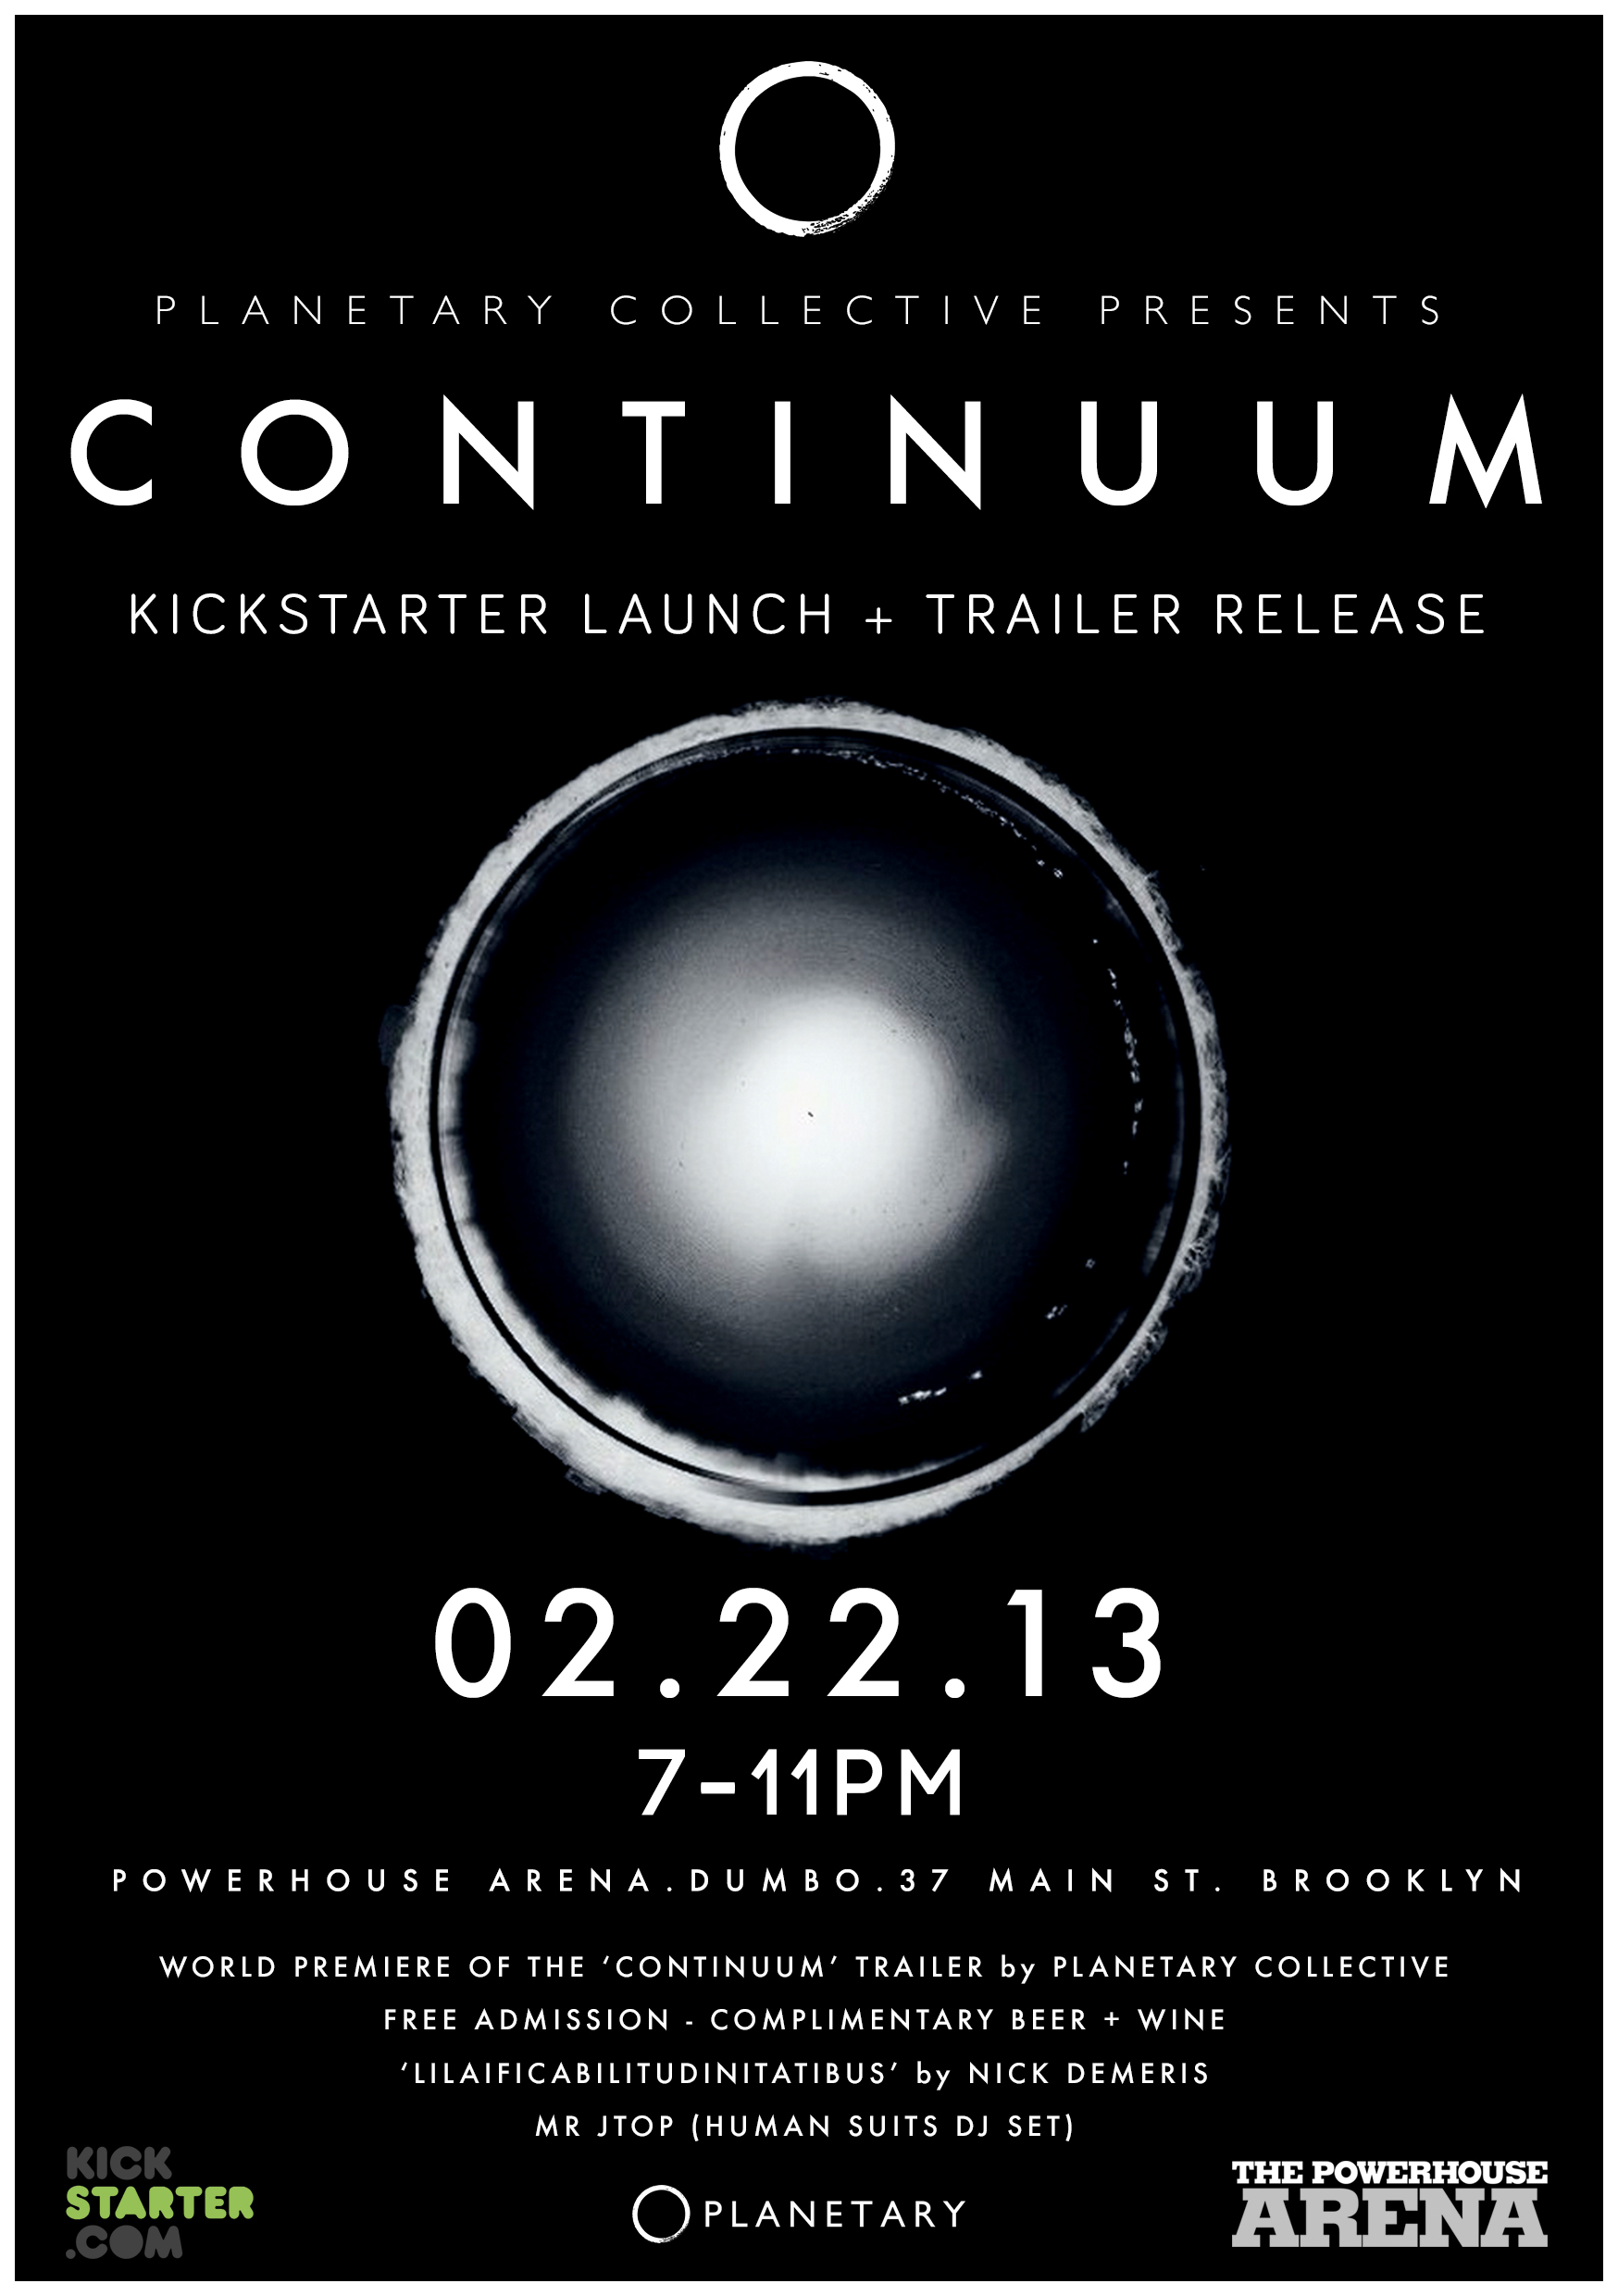 Planetary Collective CONTINUUM Kickstarter Launch & Trailer Release